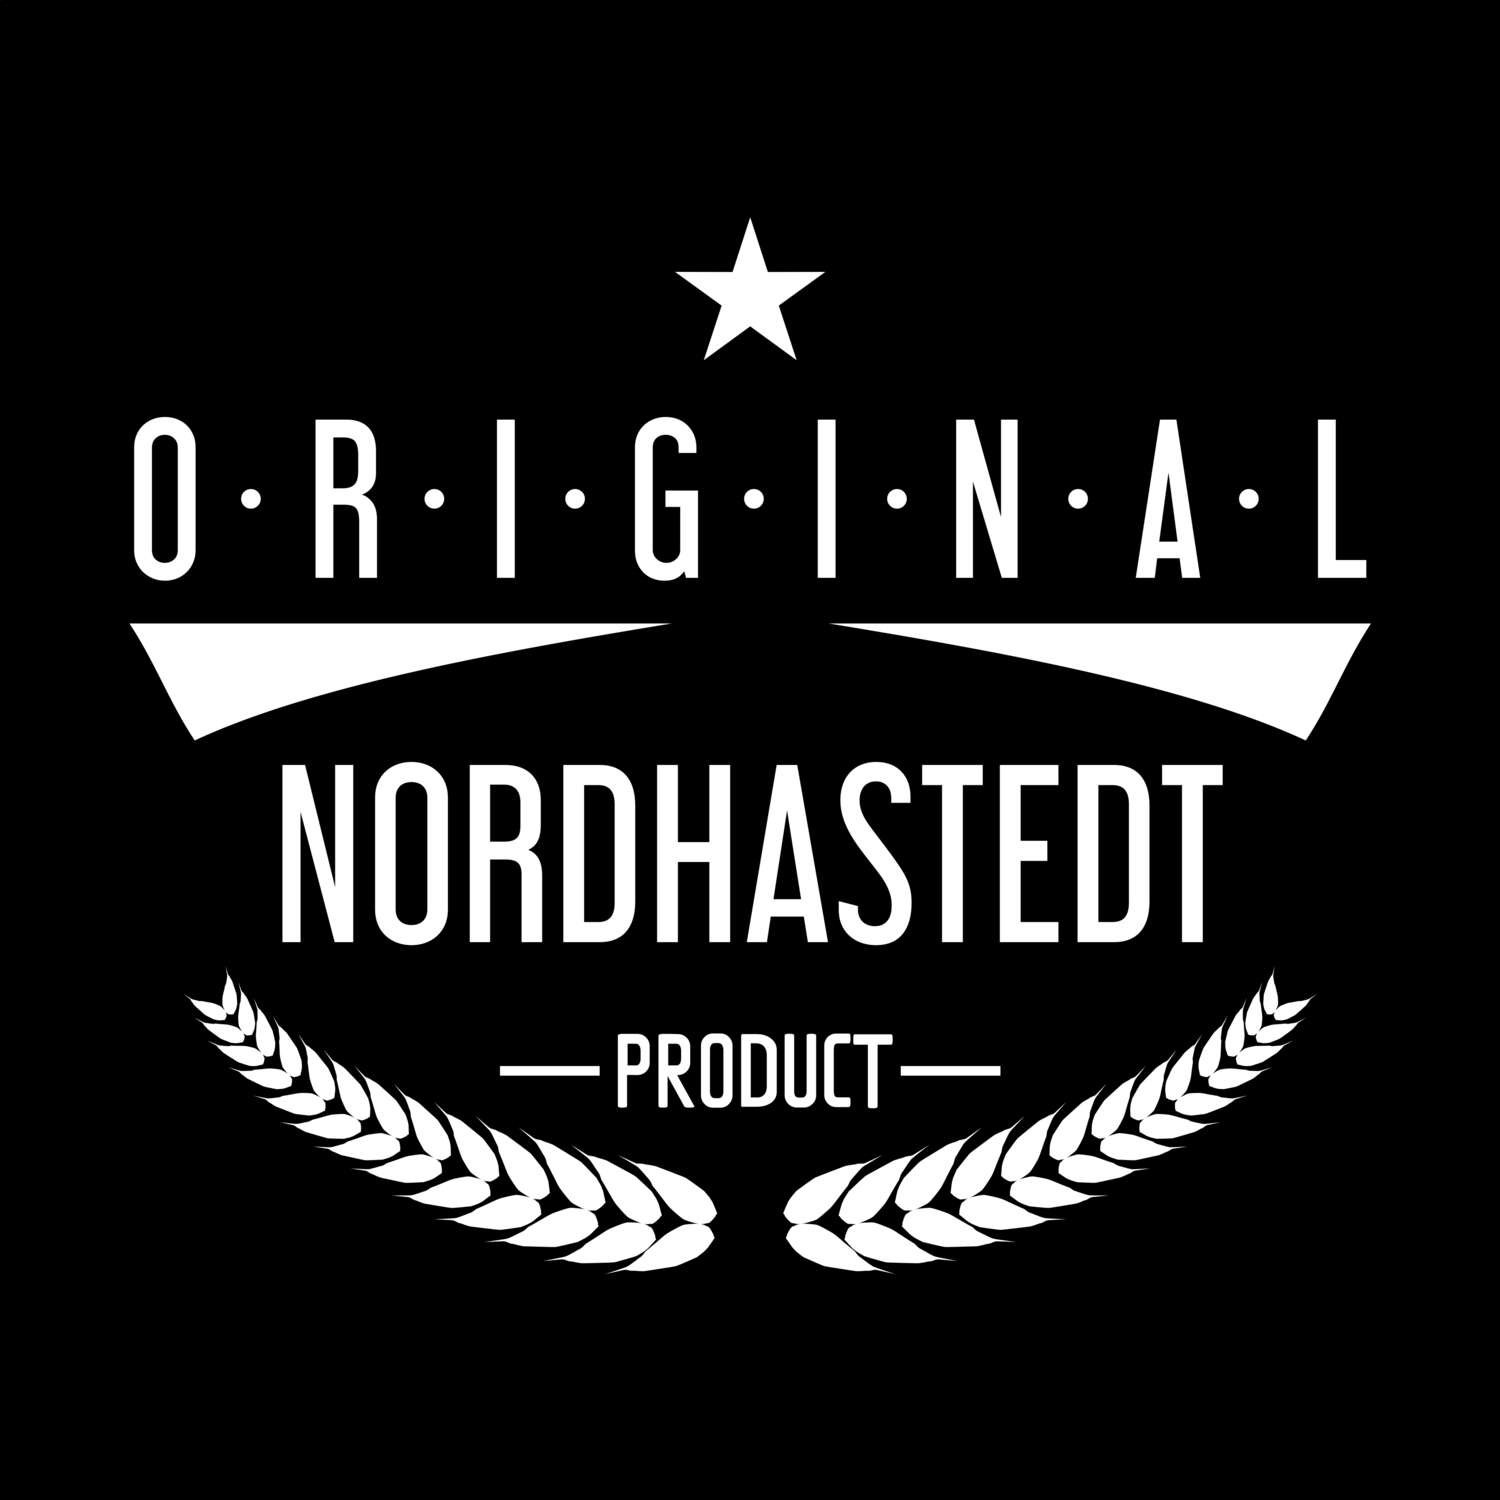 Nordhastedt T-Shirt »Original Product«